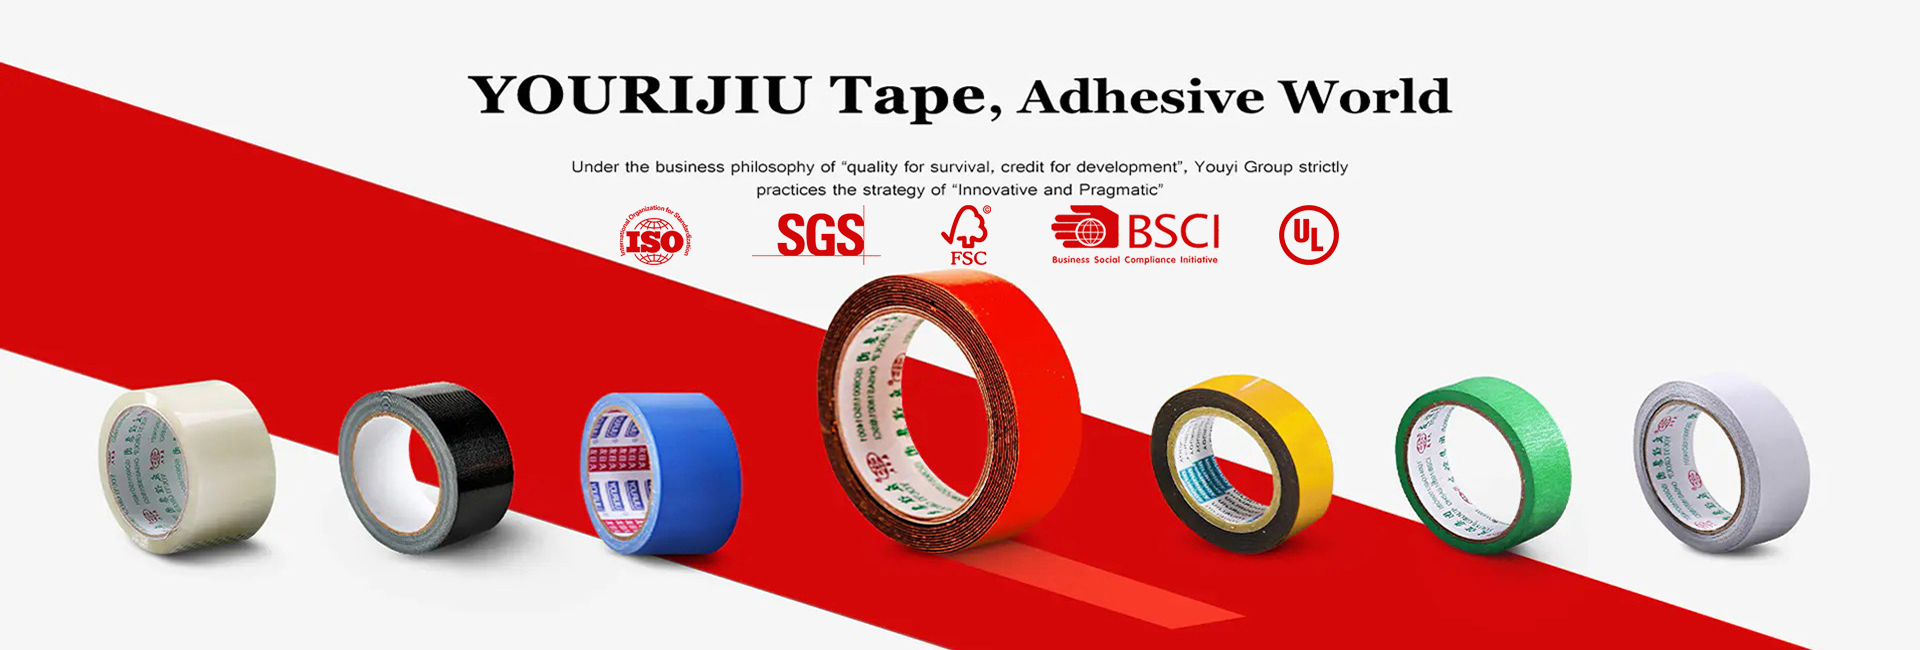 Yourijiu adhesive tape banner